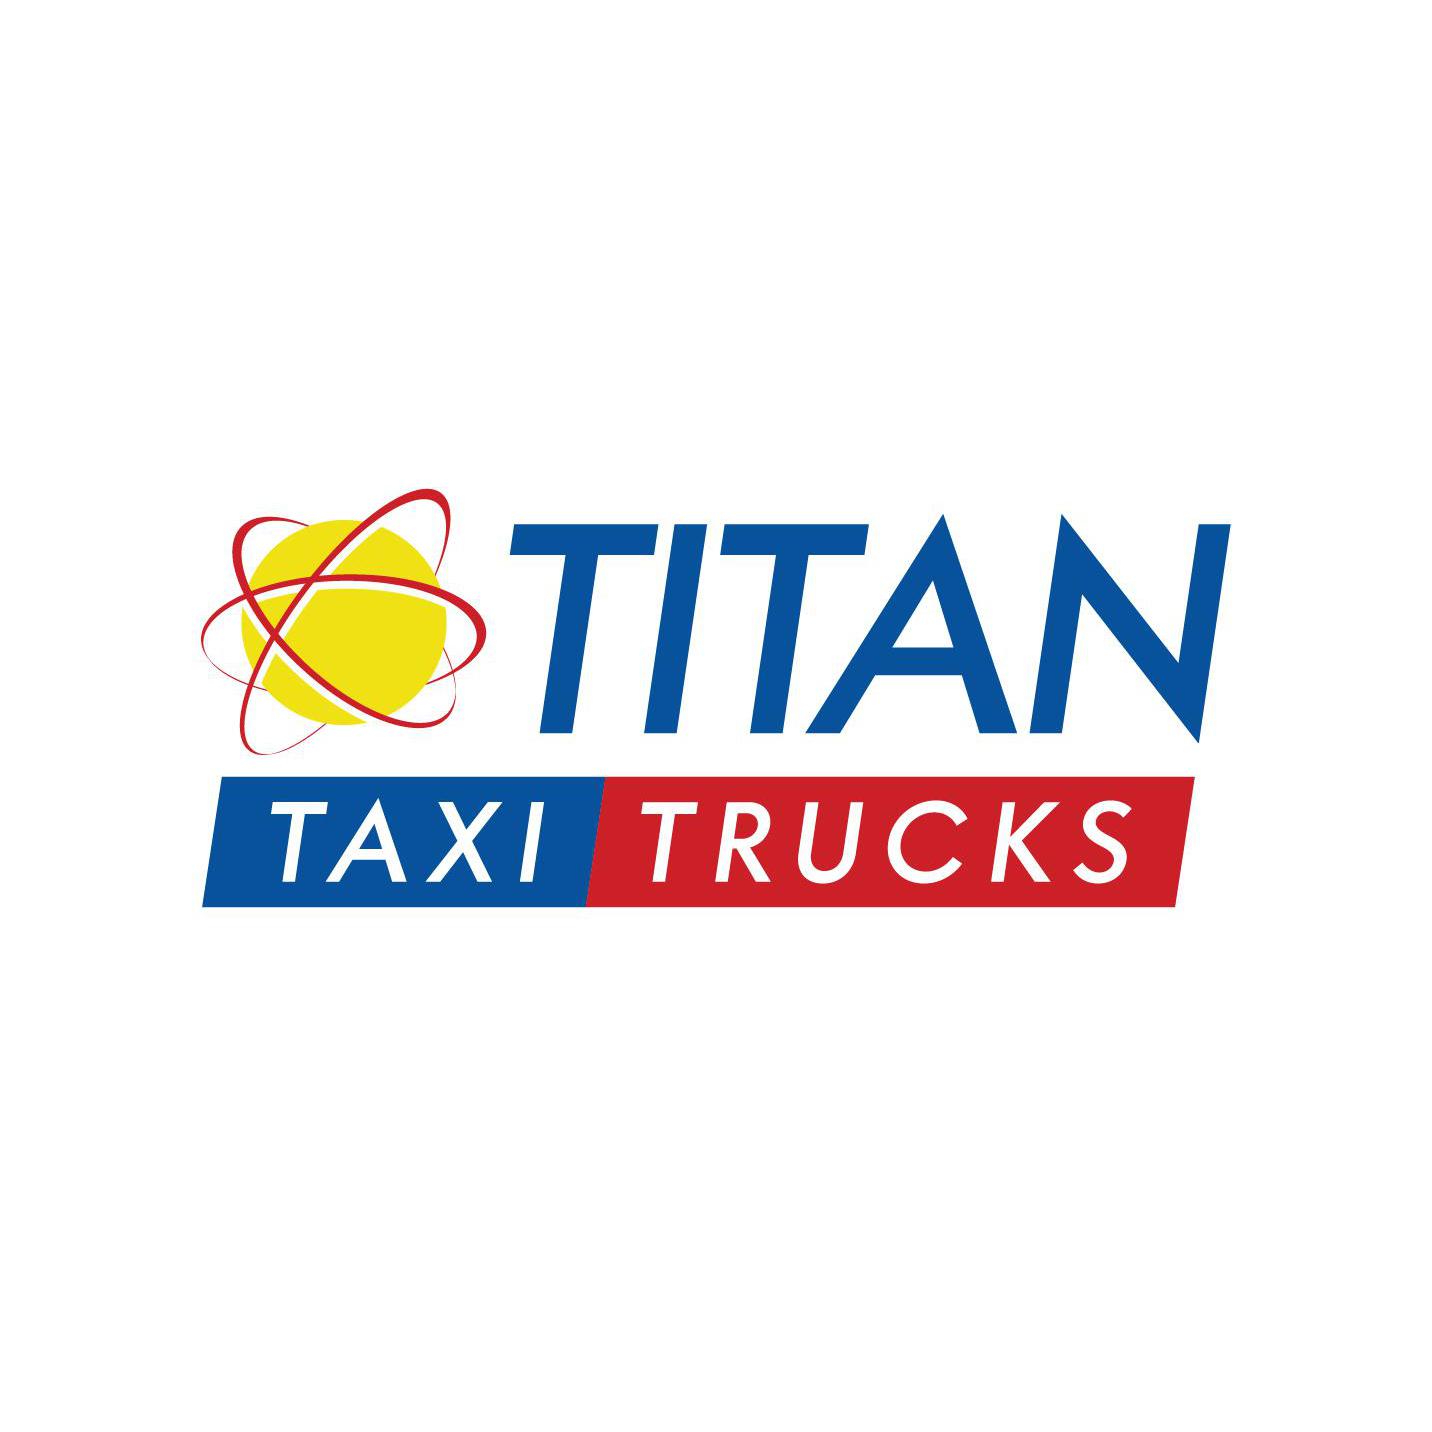 Titan Taxi Trucks - Mulgrave, VIC 3170 - 13 10 44 | ShowMeLocal.com